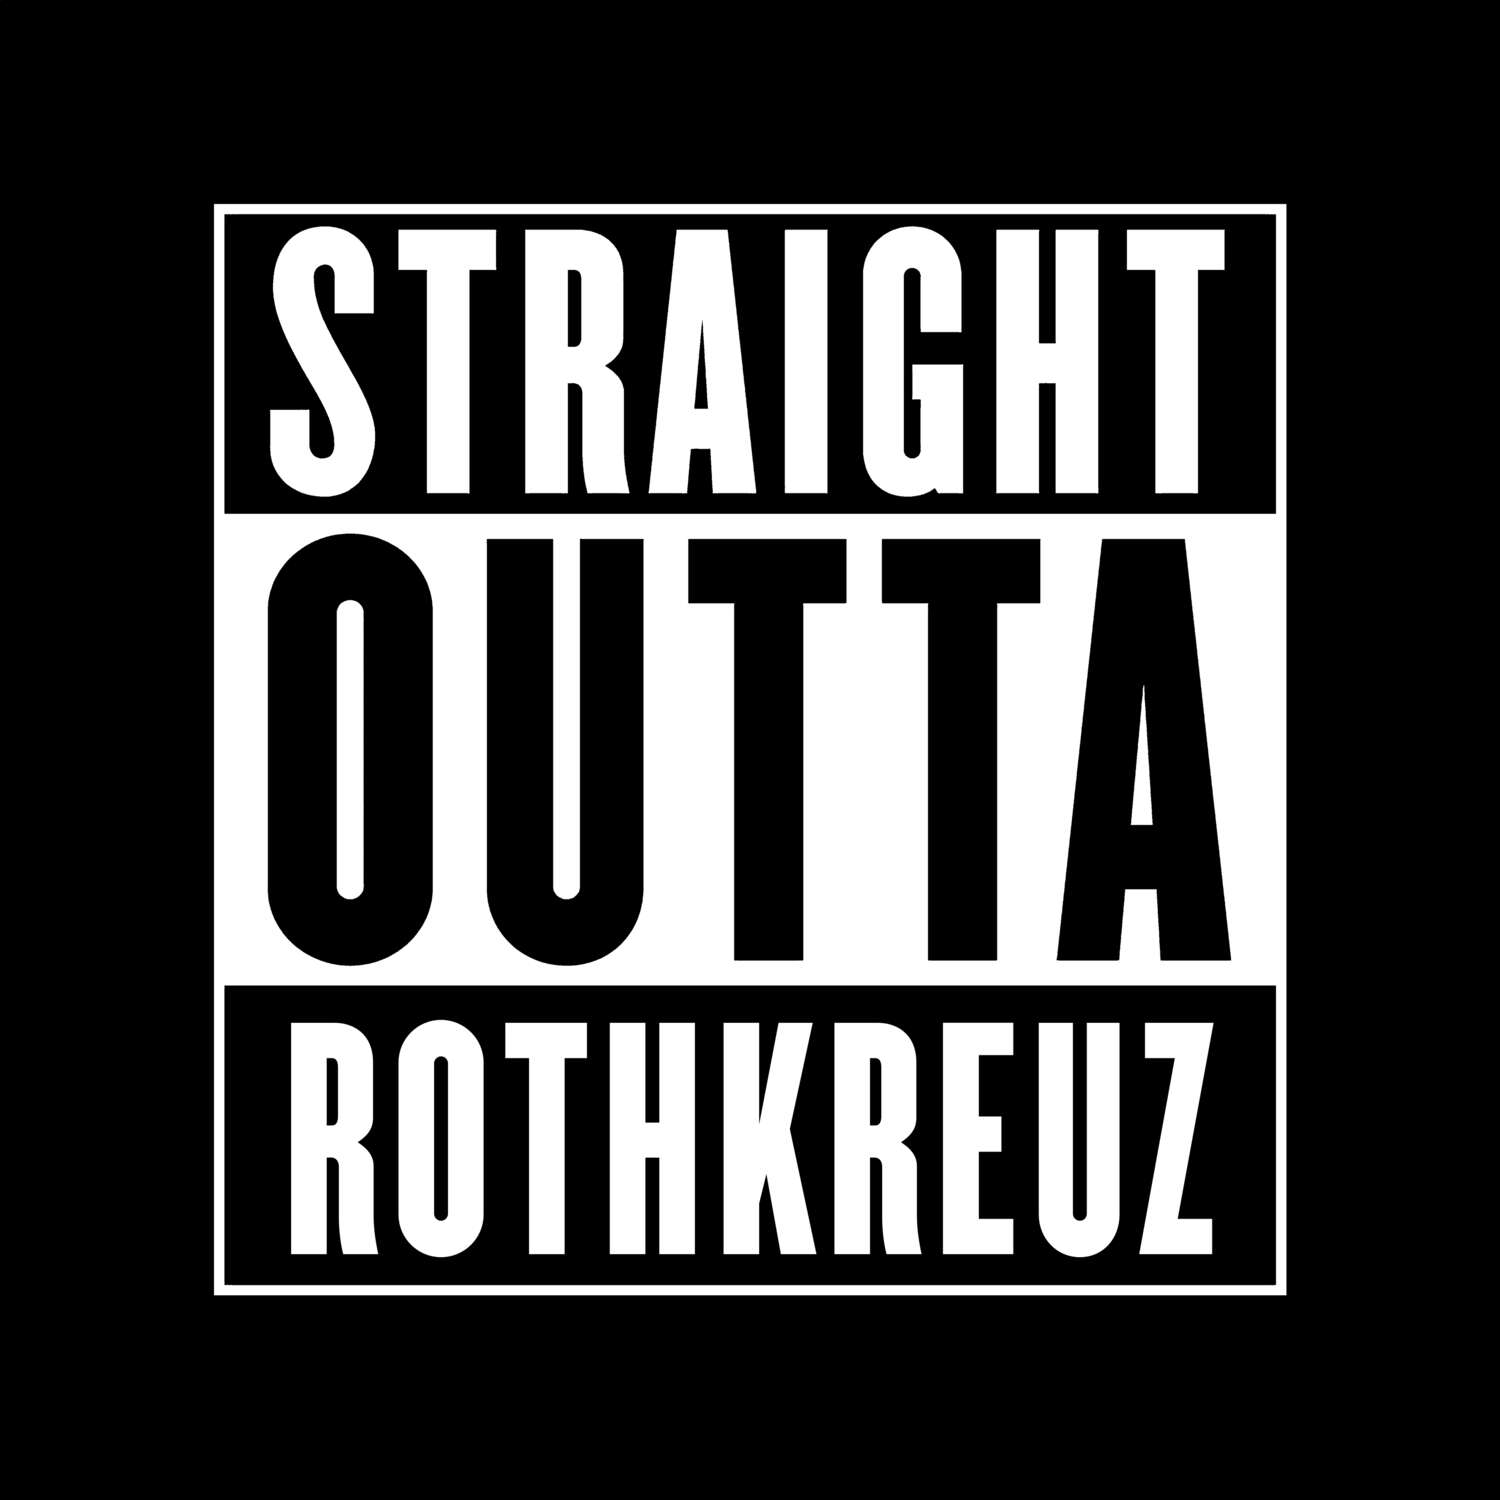 Rothkreuz T-Shirt »Straight Outta«